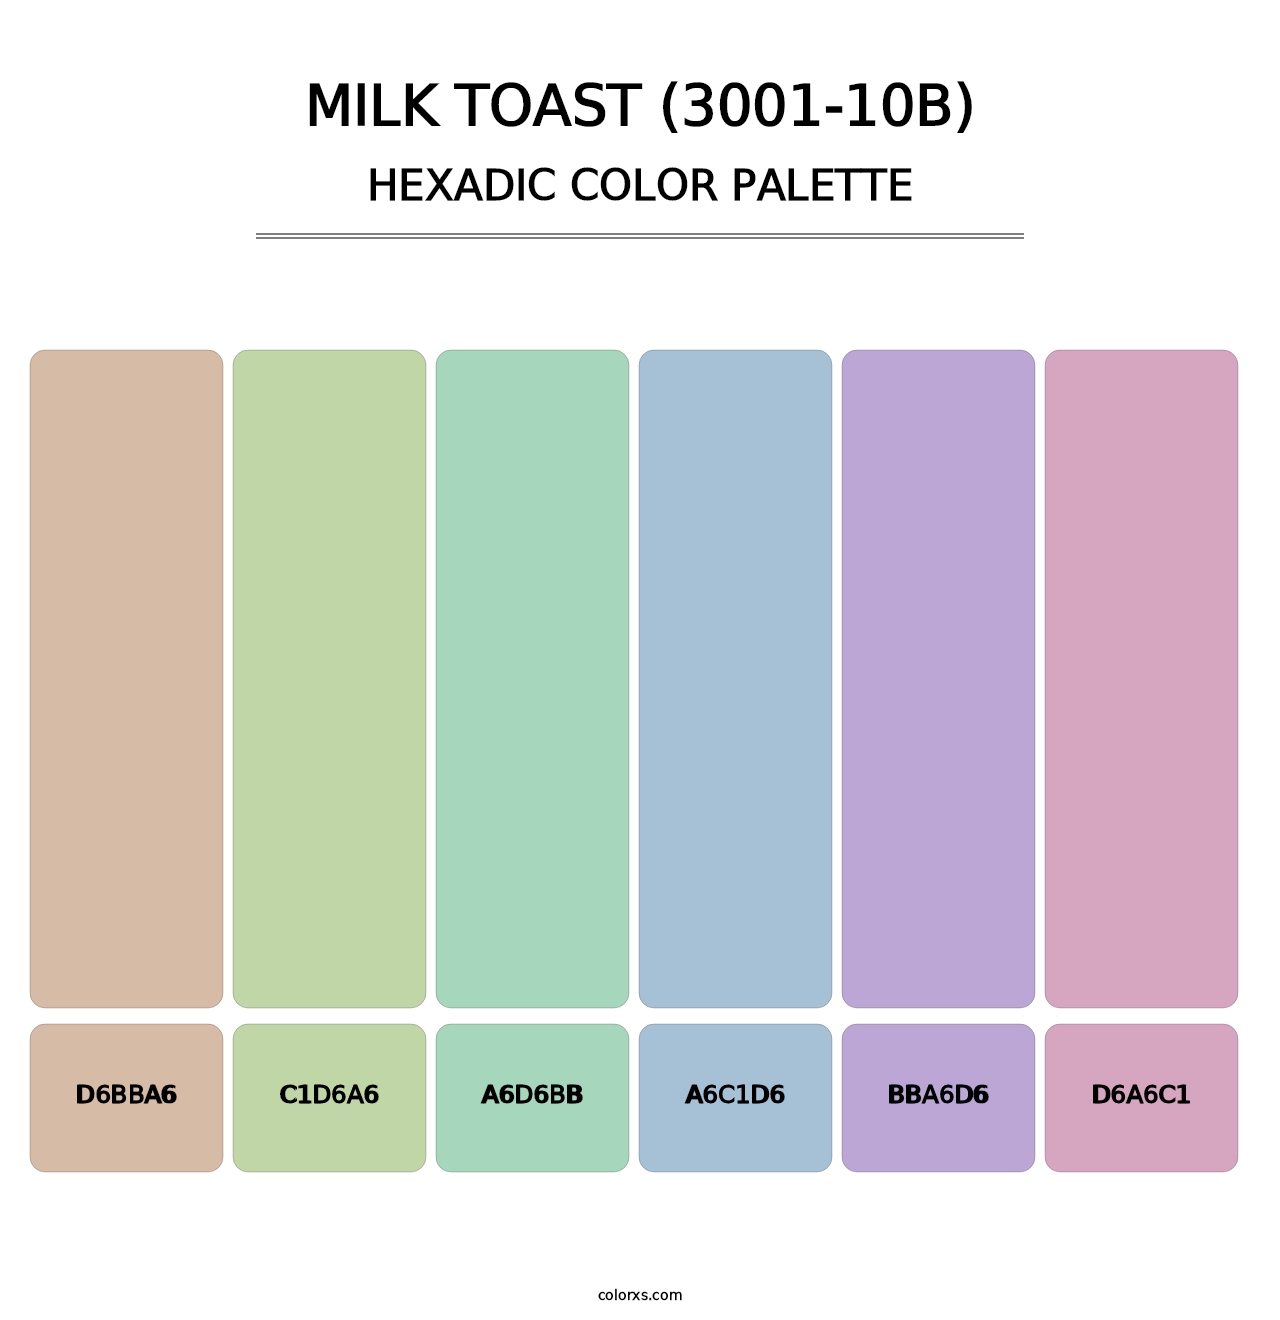 Milk Toast (3001-10B) - Hexadic Color Palette